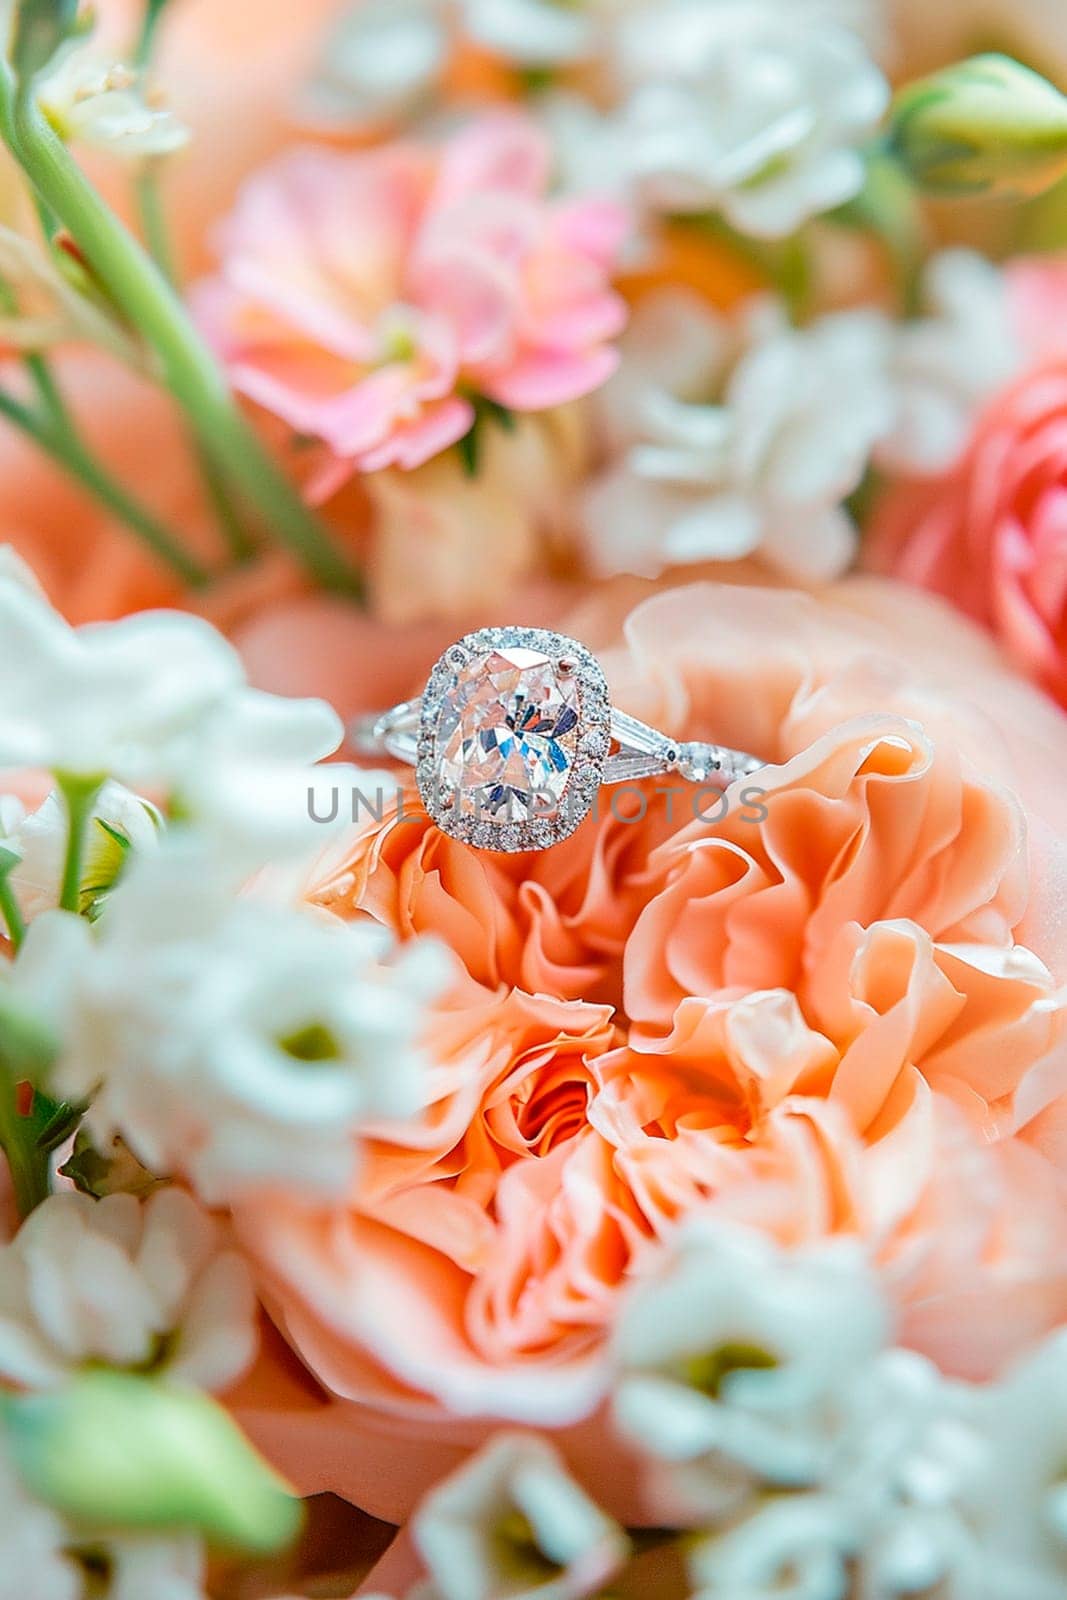 Stunning cushion cut diamond engagement ring. Selective focus. by yanadjana